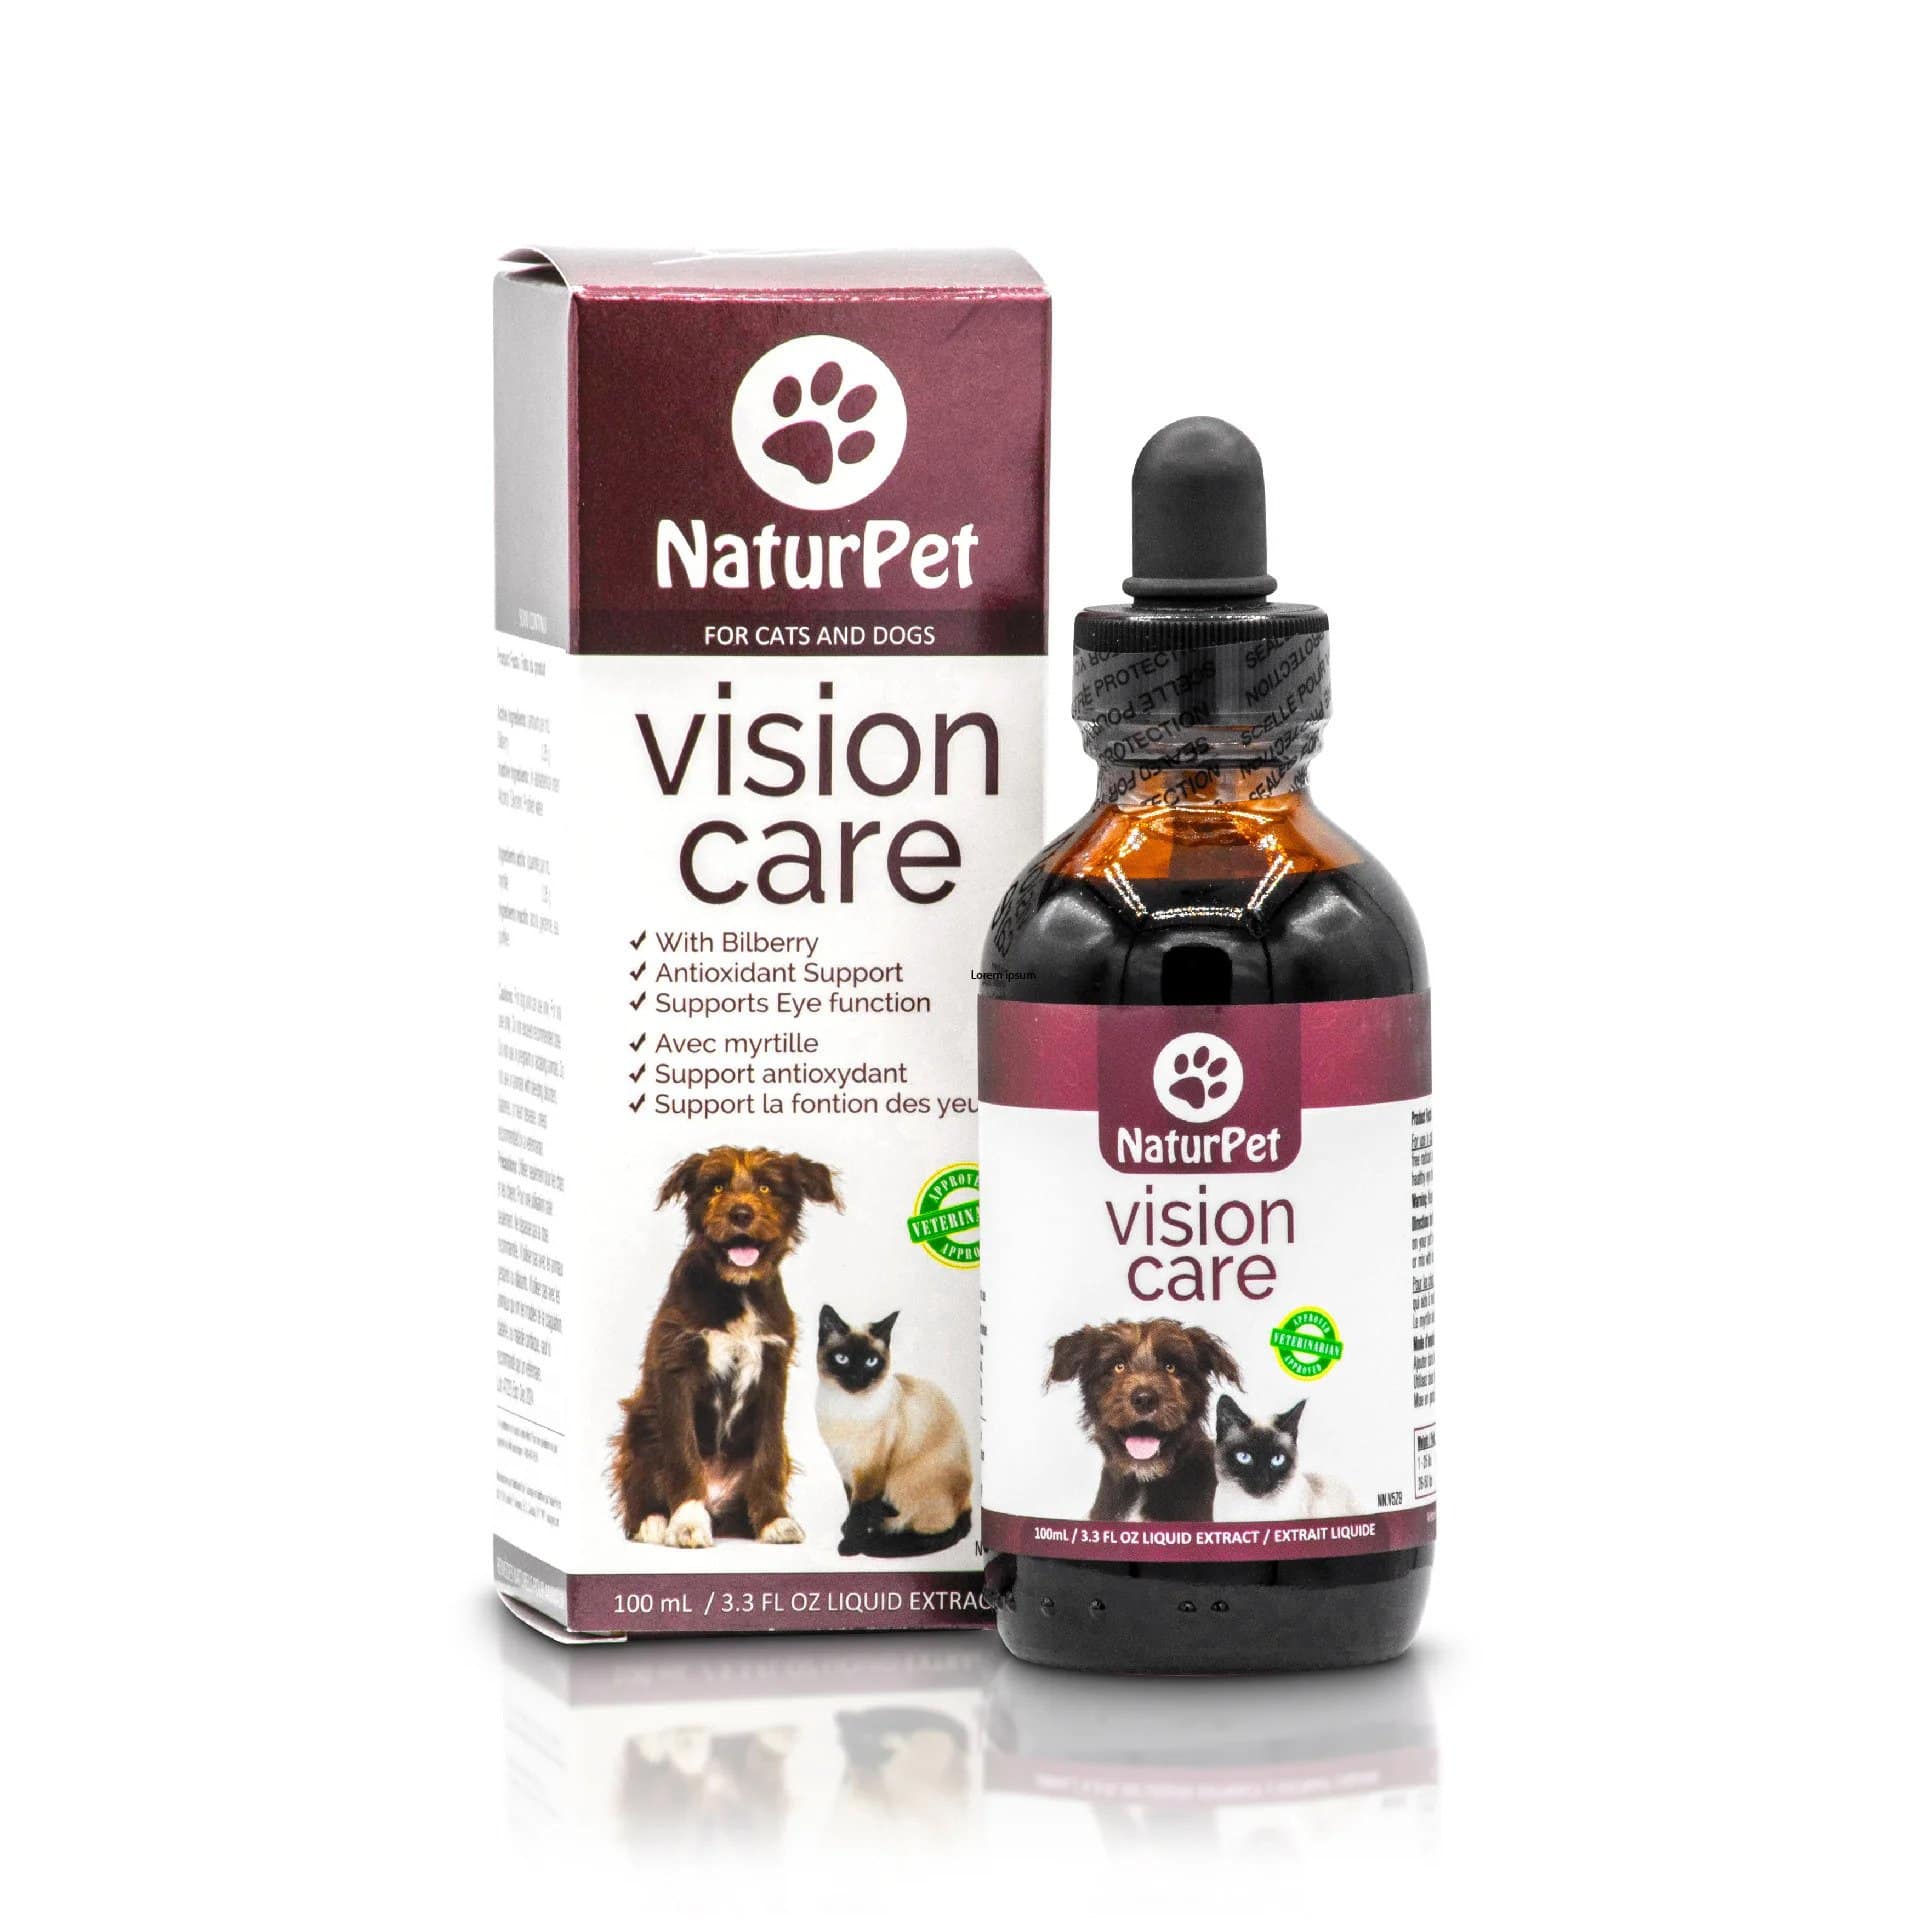 NaturPet Vision Care Actual